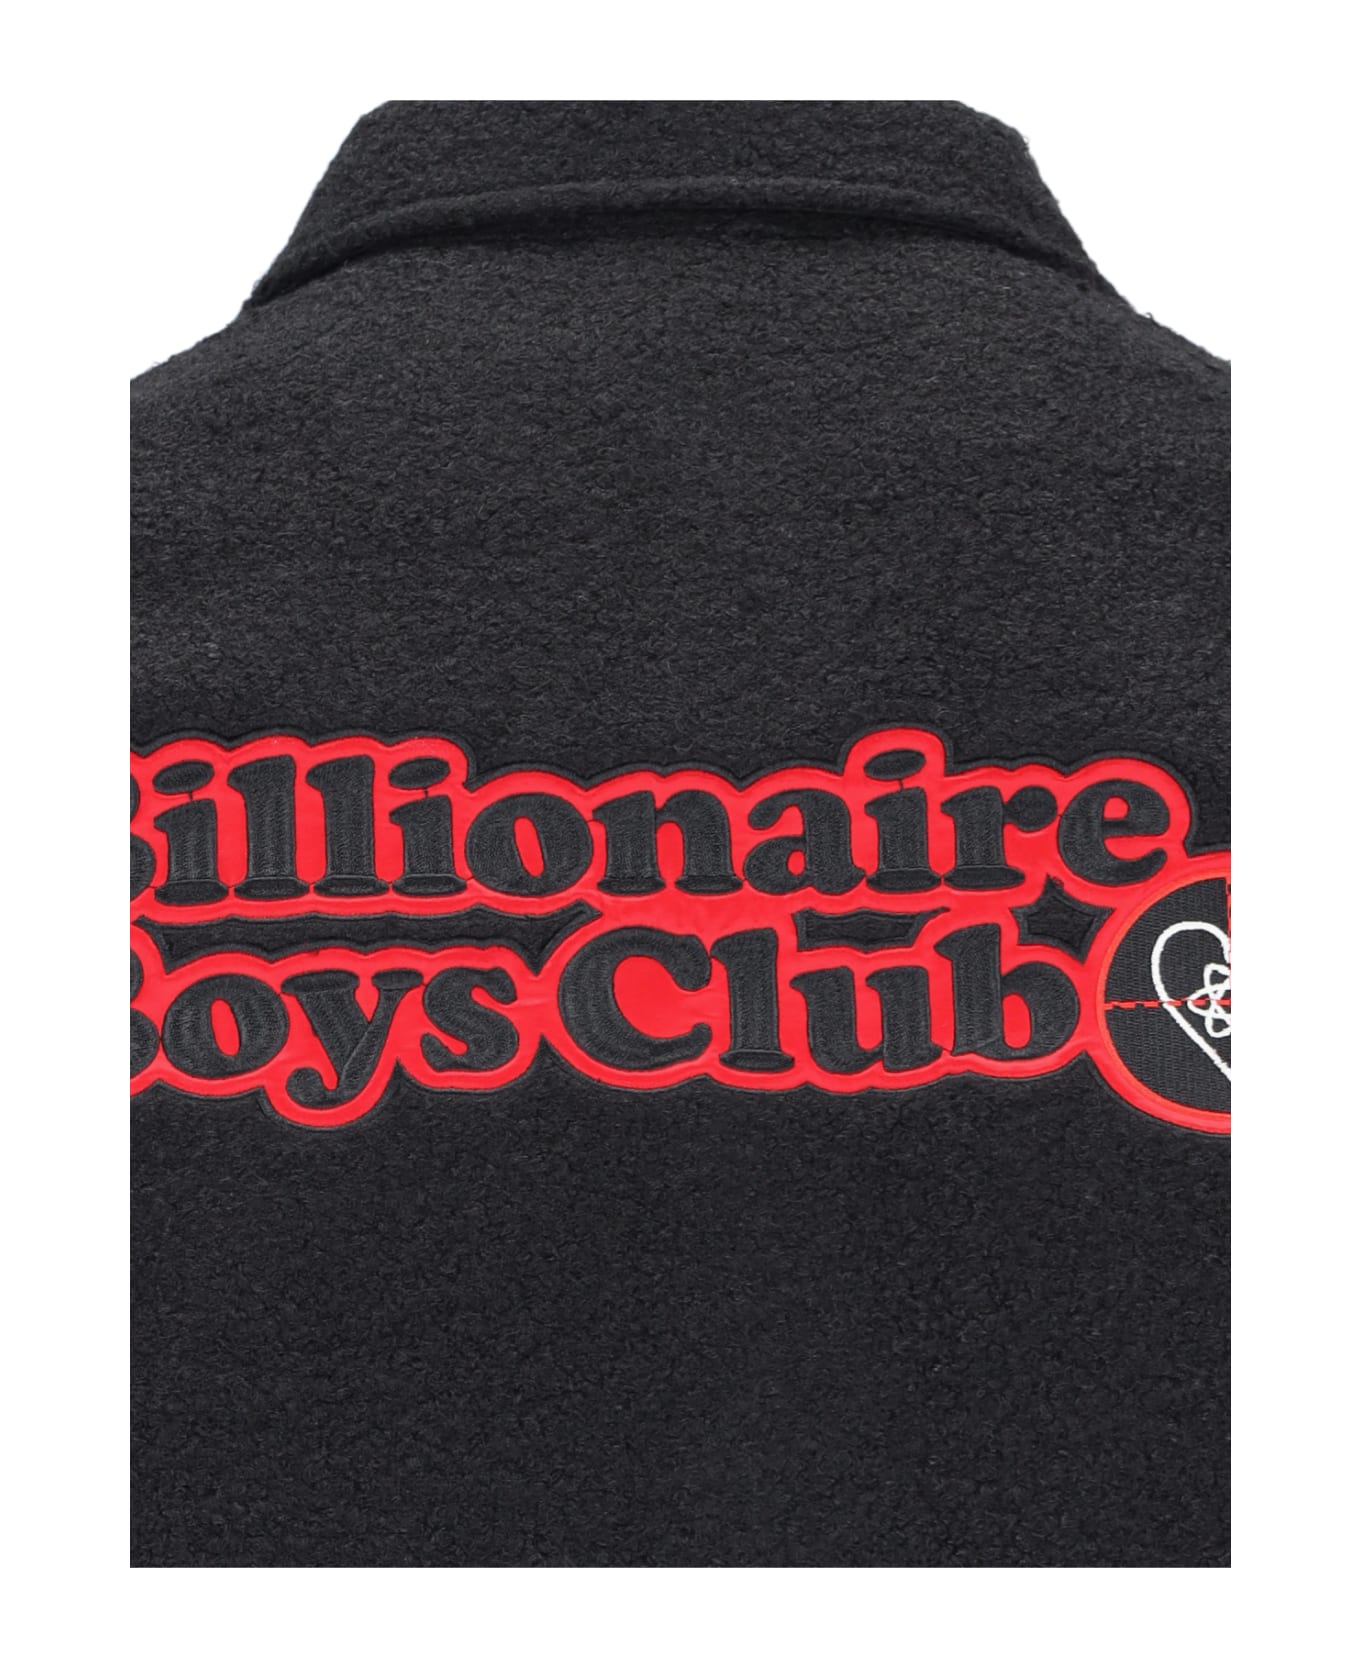 Billionaire Boys Club Jacket - Black